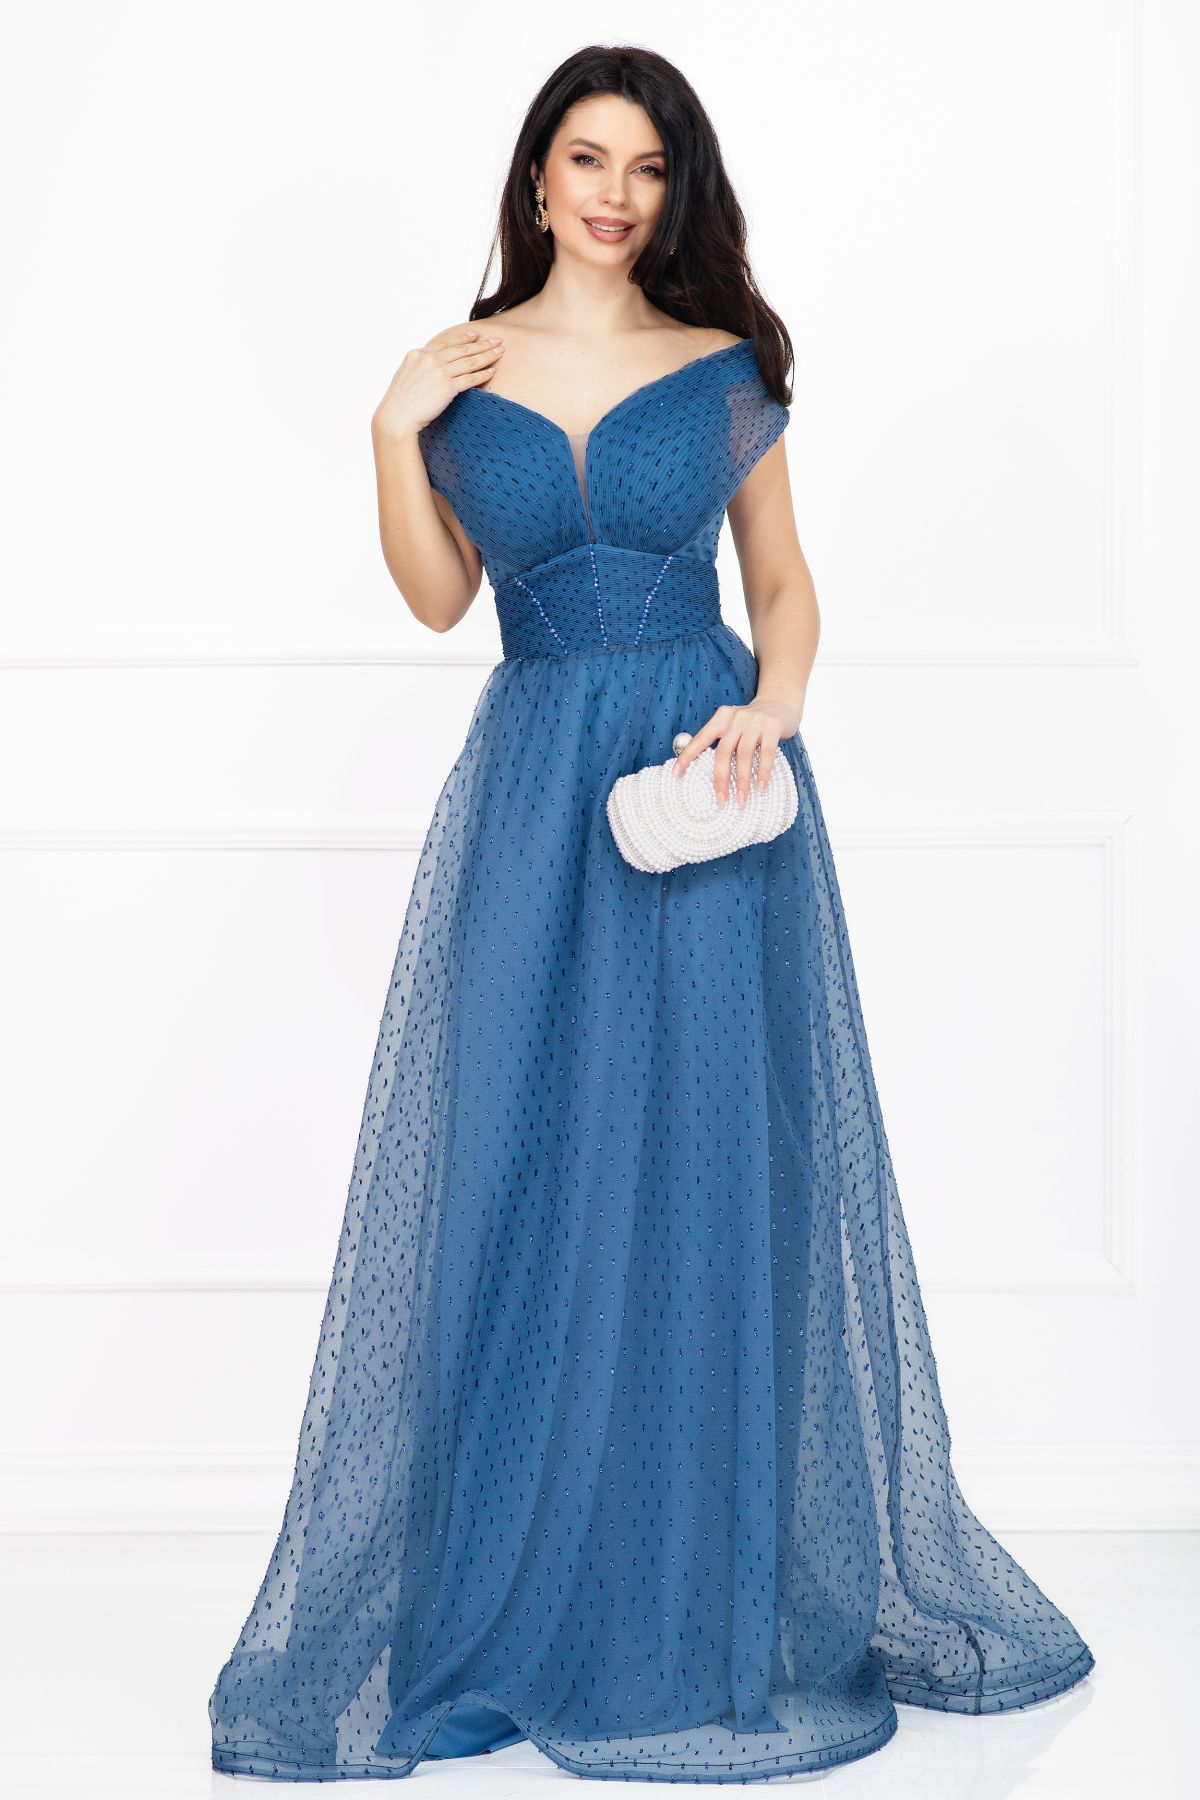 Rochie de seara Cindy eleganta tip printesa bleu cu margele decorative